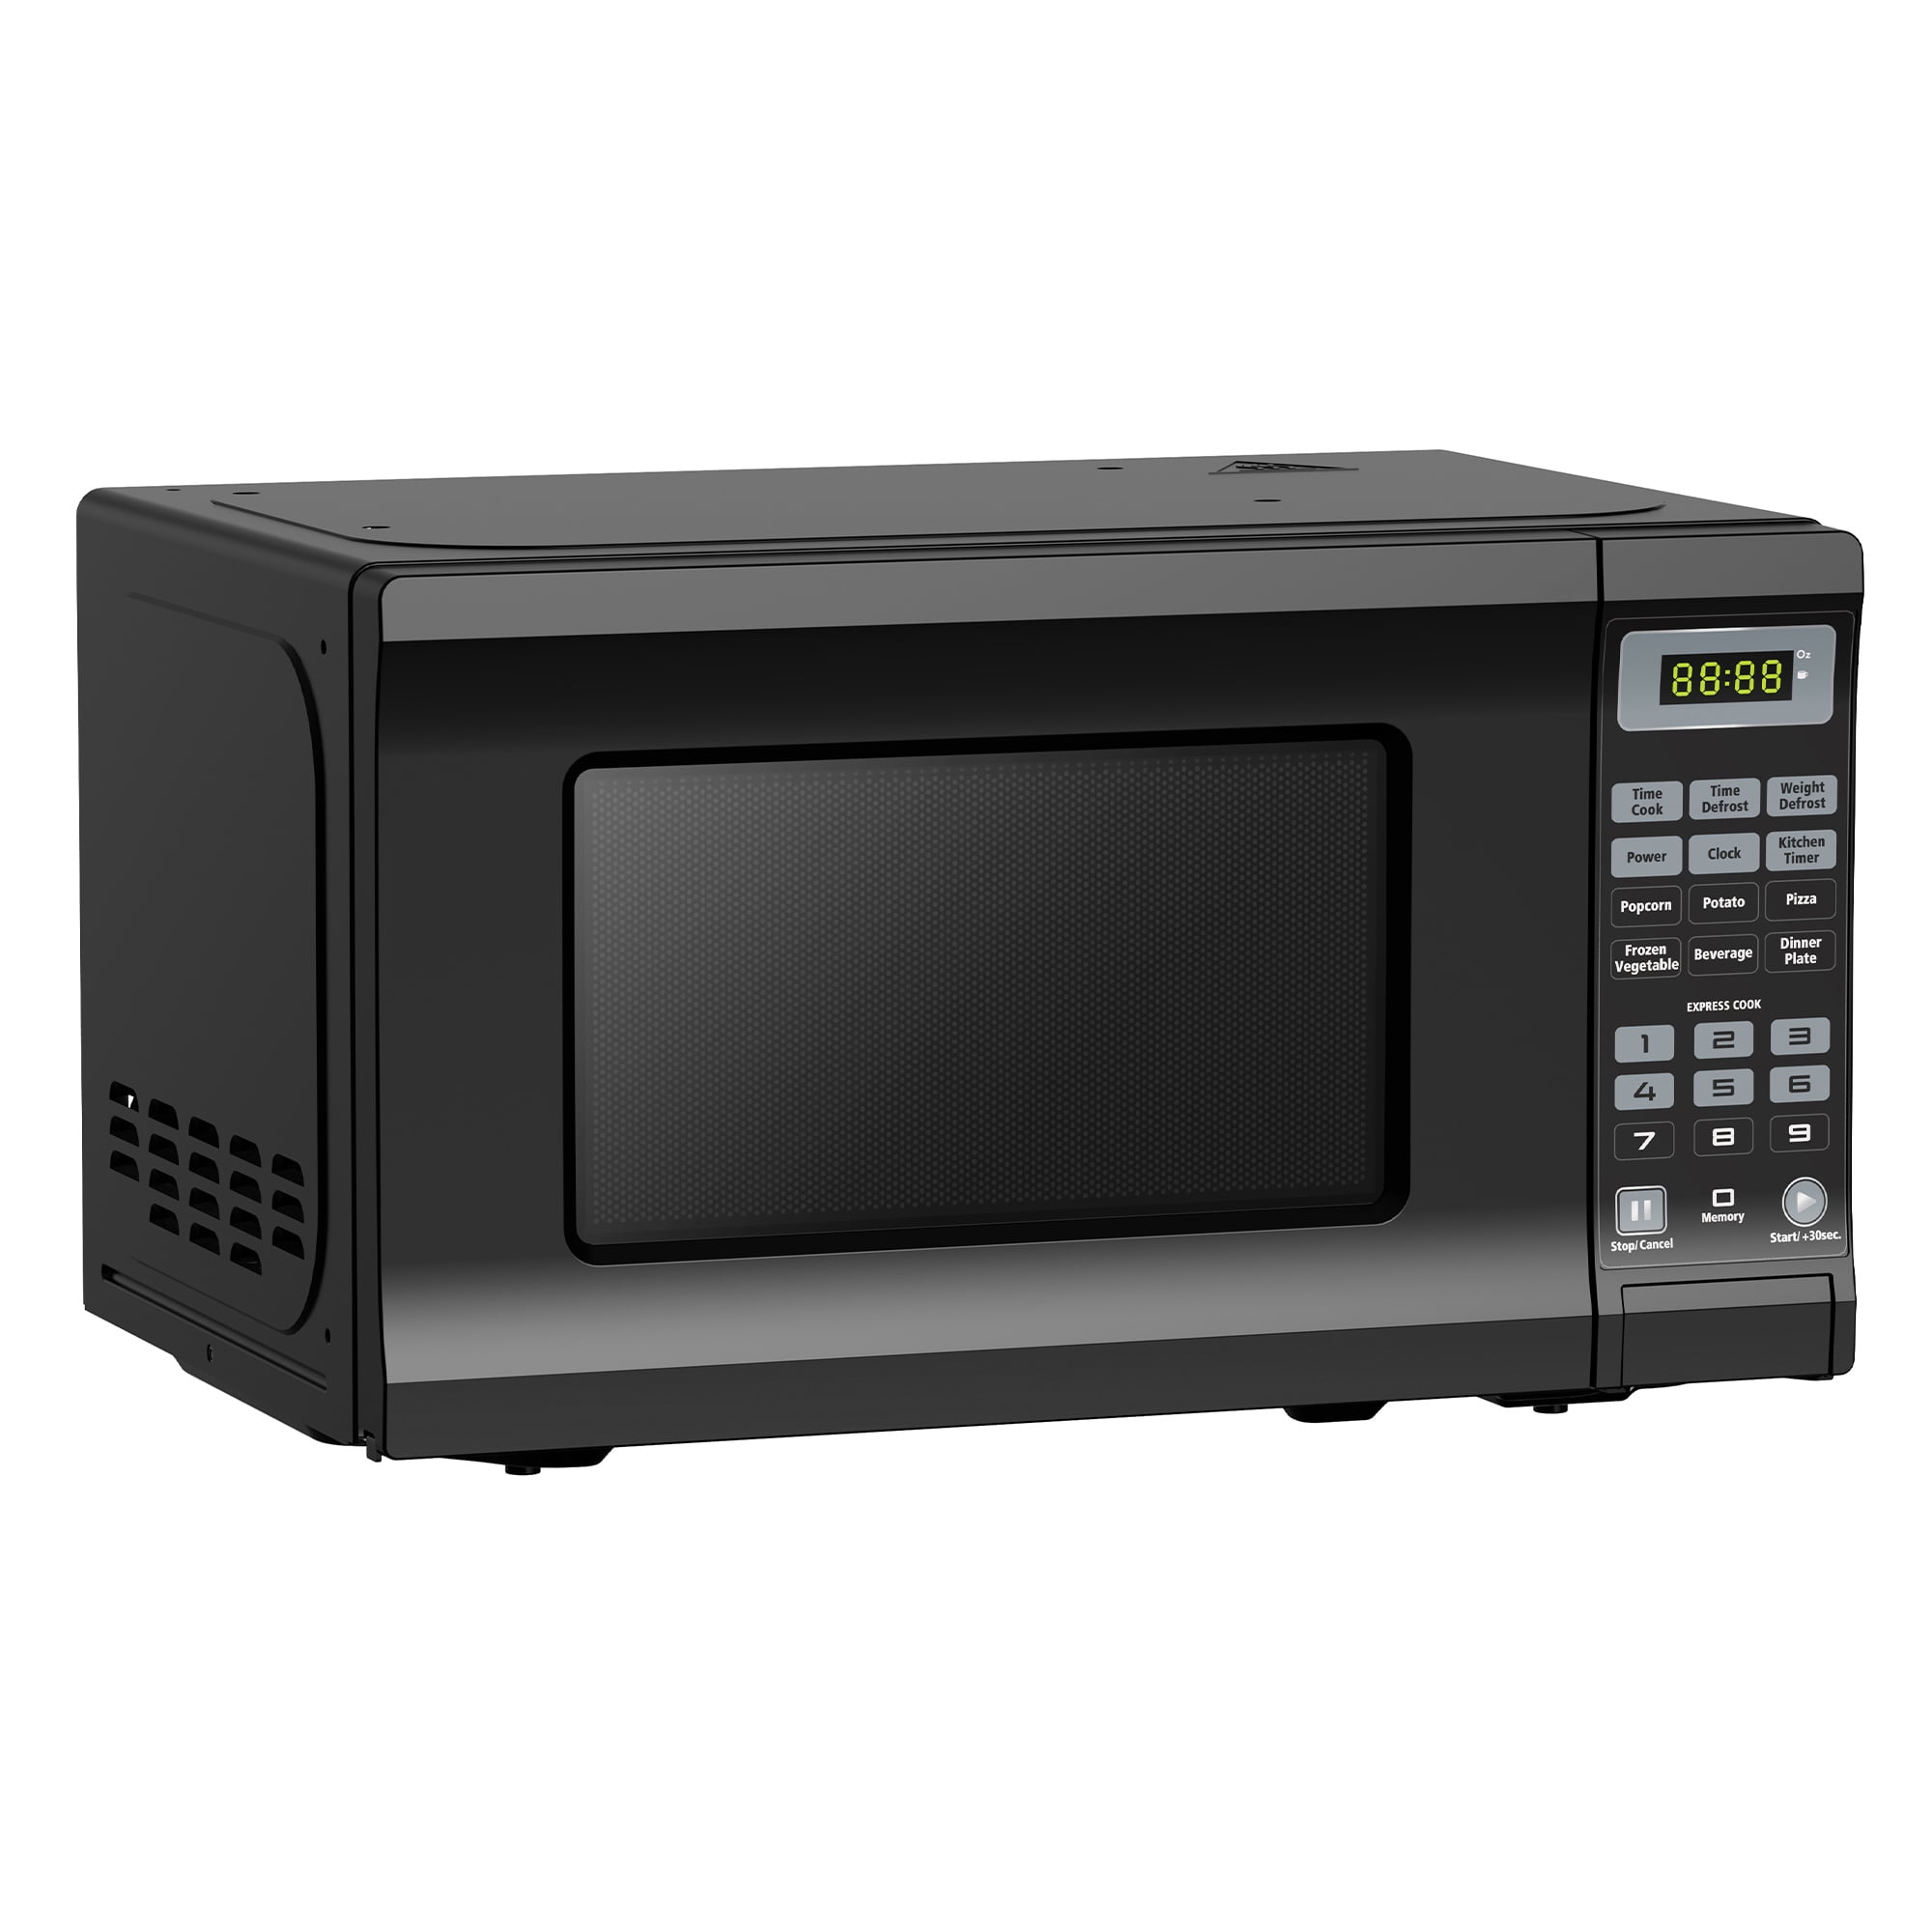 BLACK+DECKER 0.7-cu ft 700-Watt Countertop Microwave (Stainless